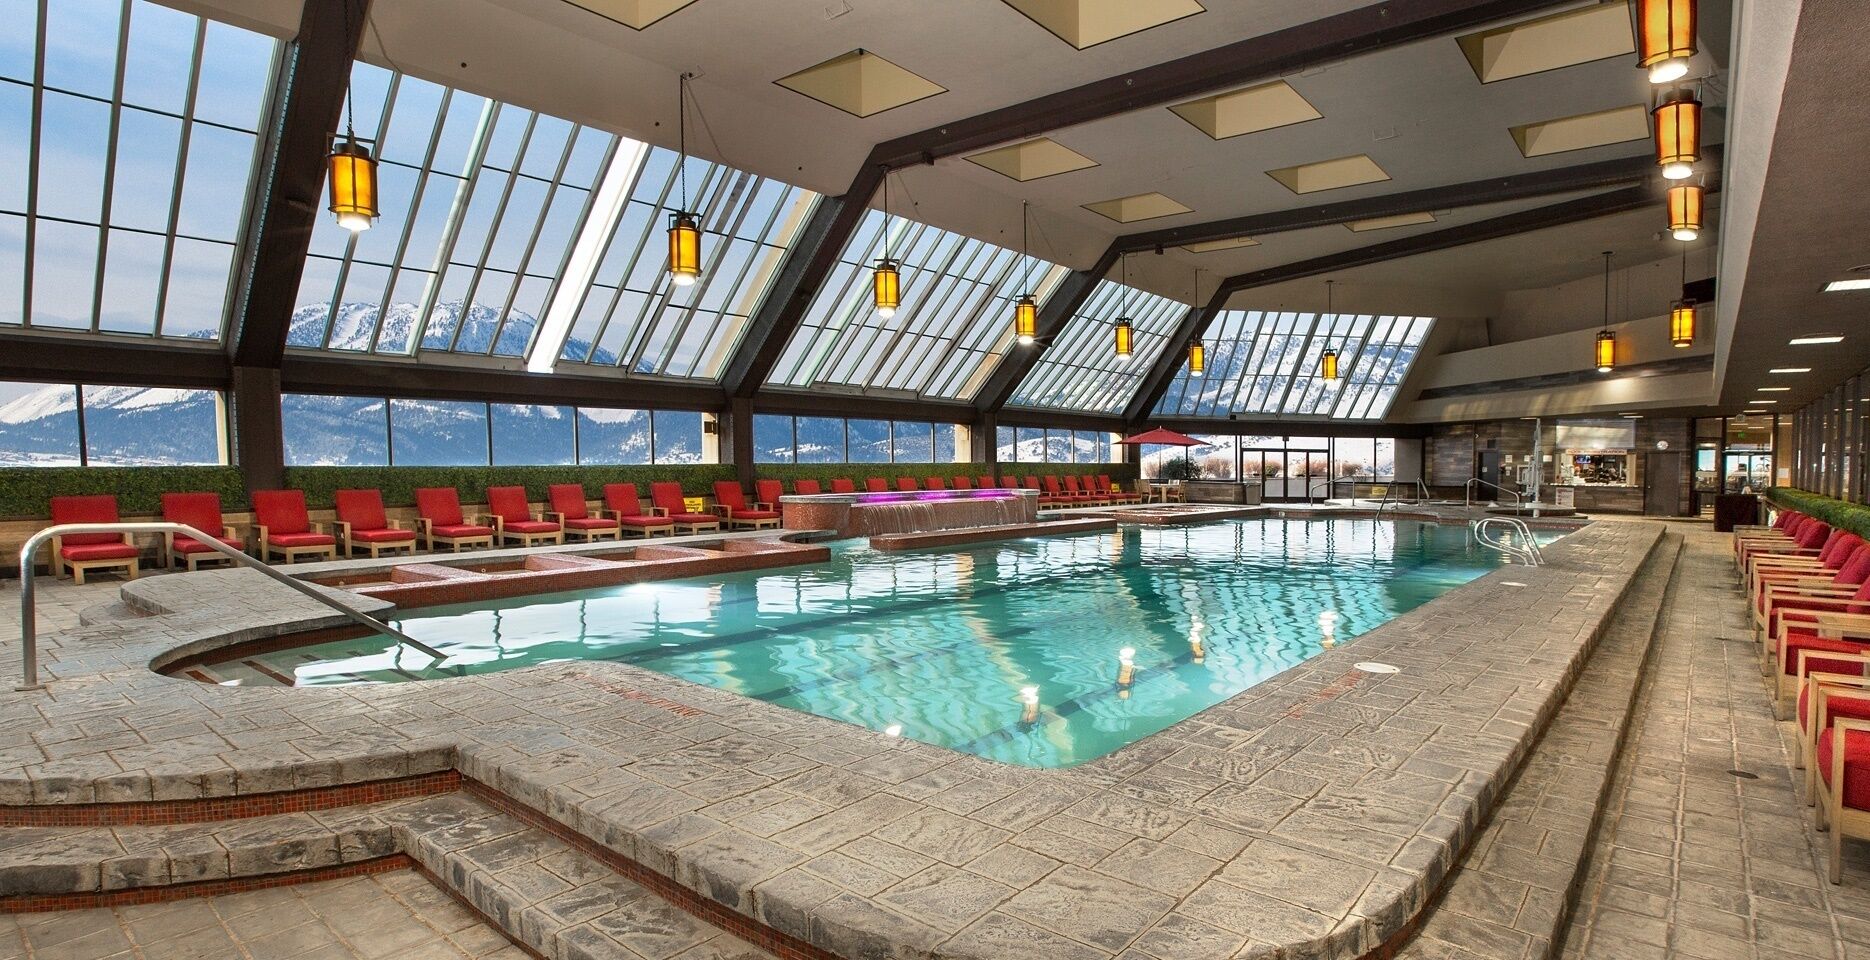 Pool view of Nugget Casino Resort